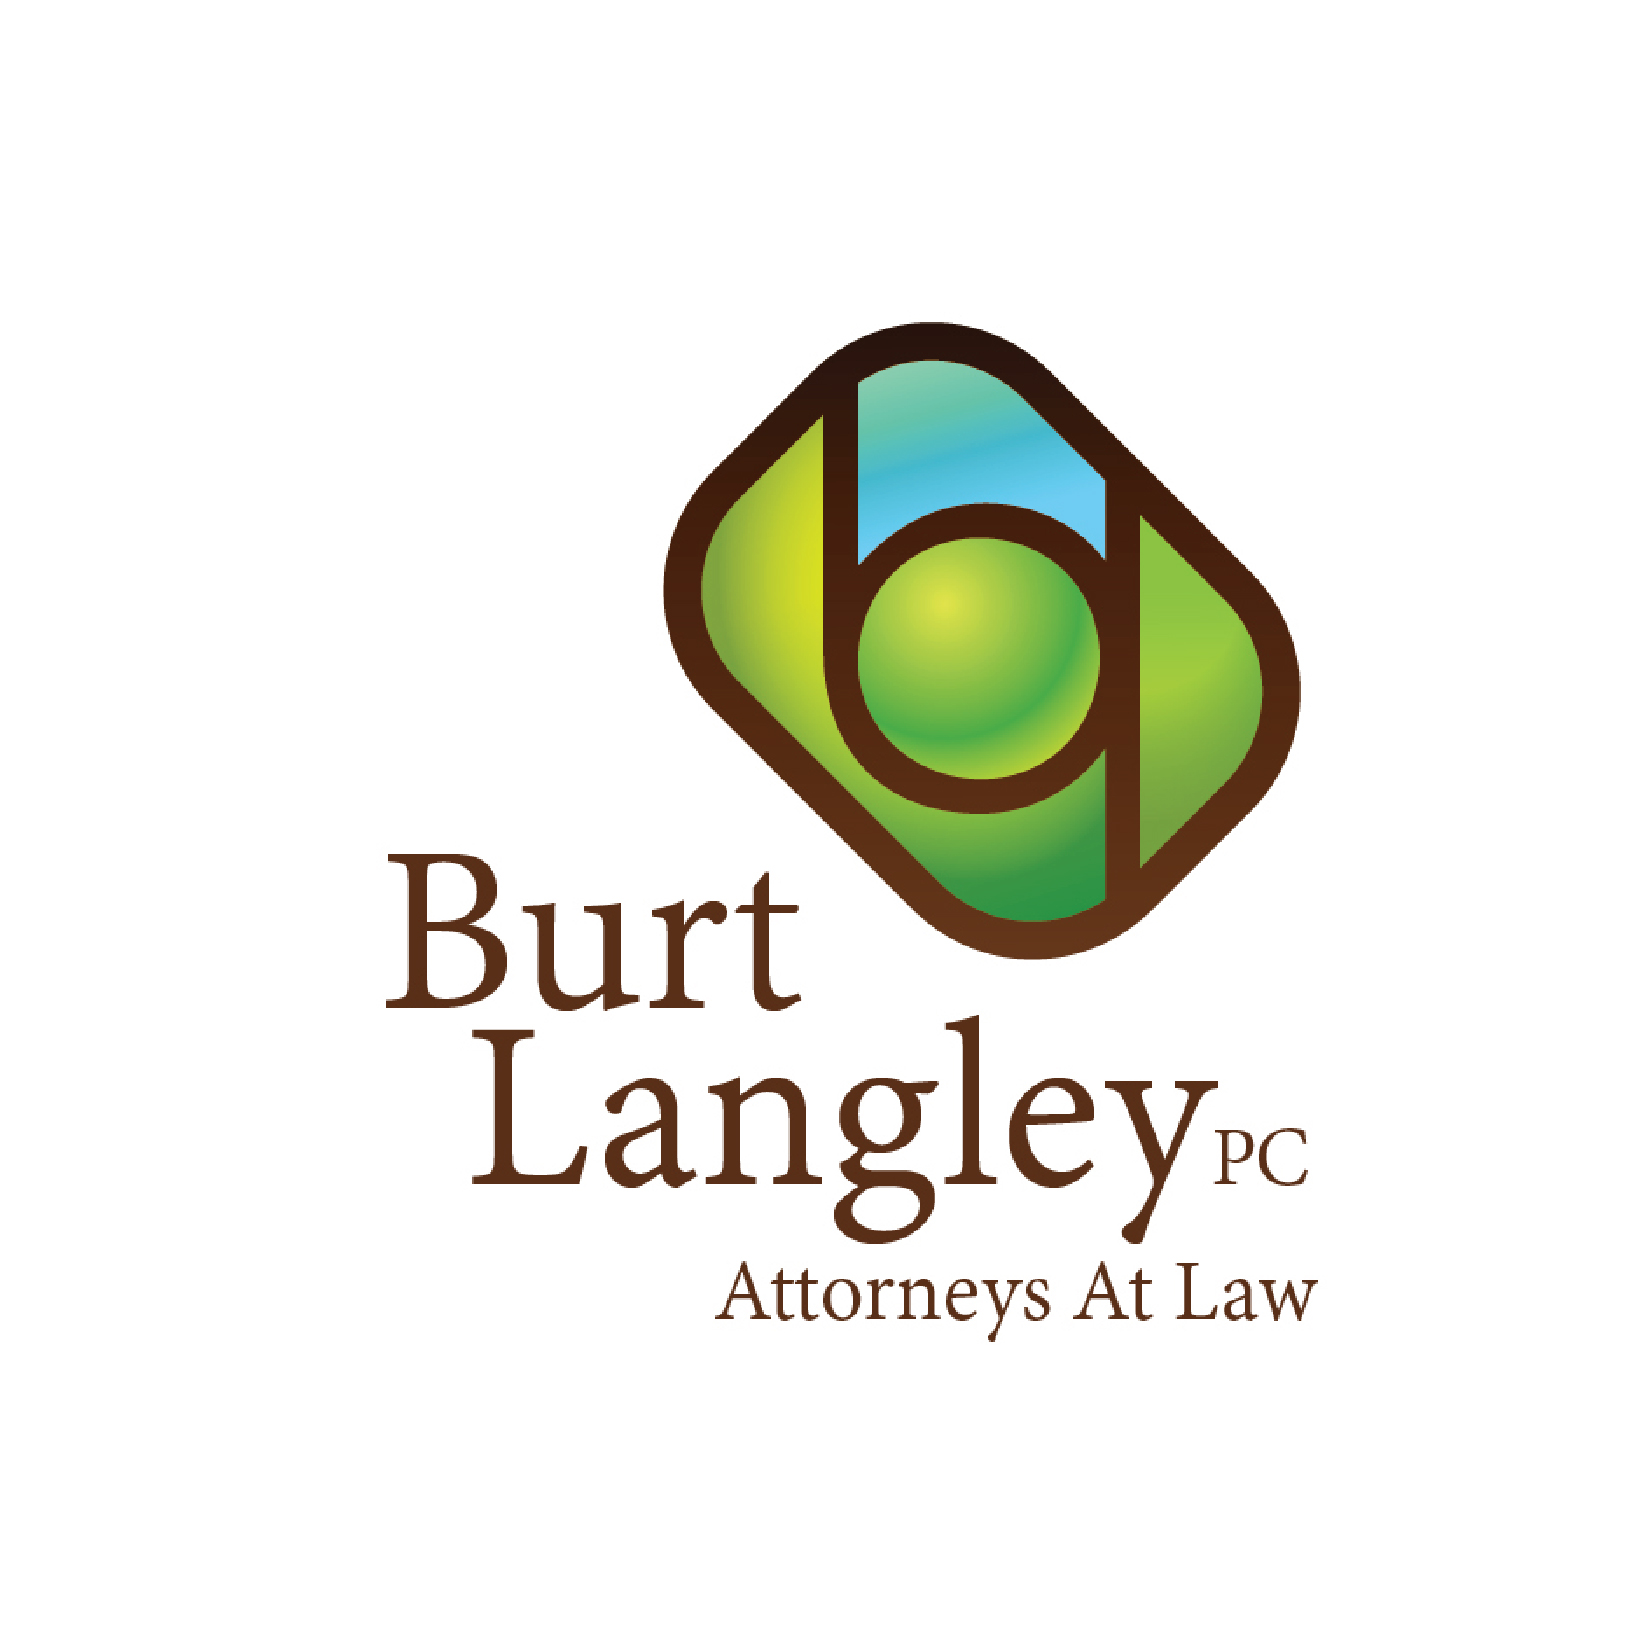 Burt Langley PC Attorneys At Law Logo